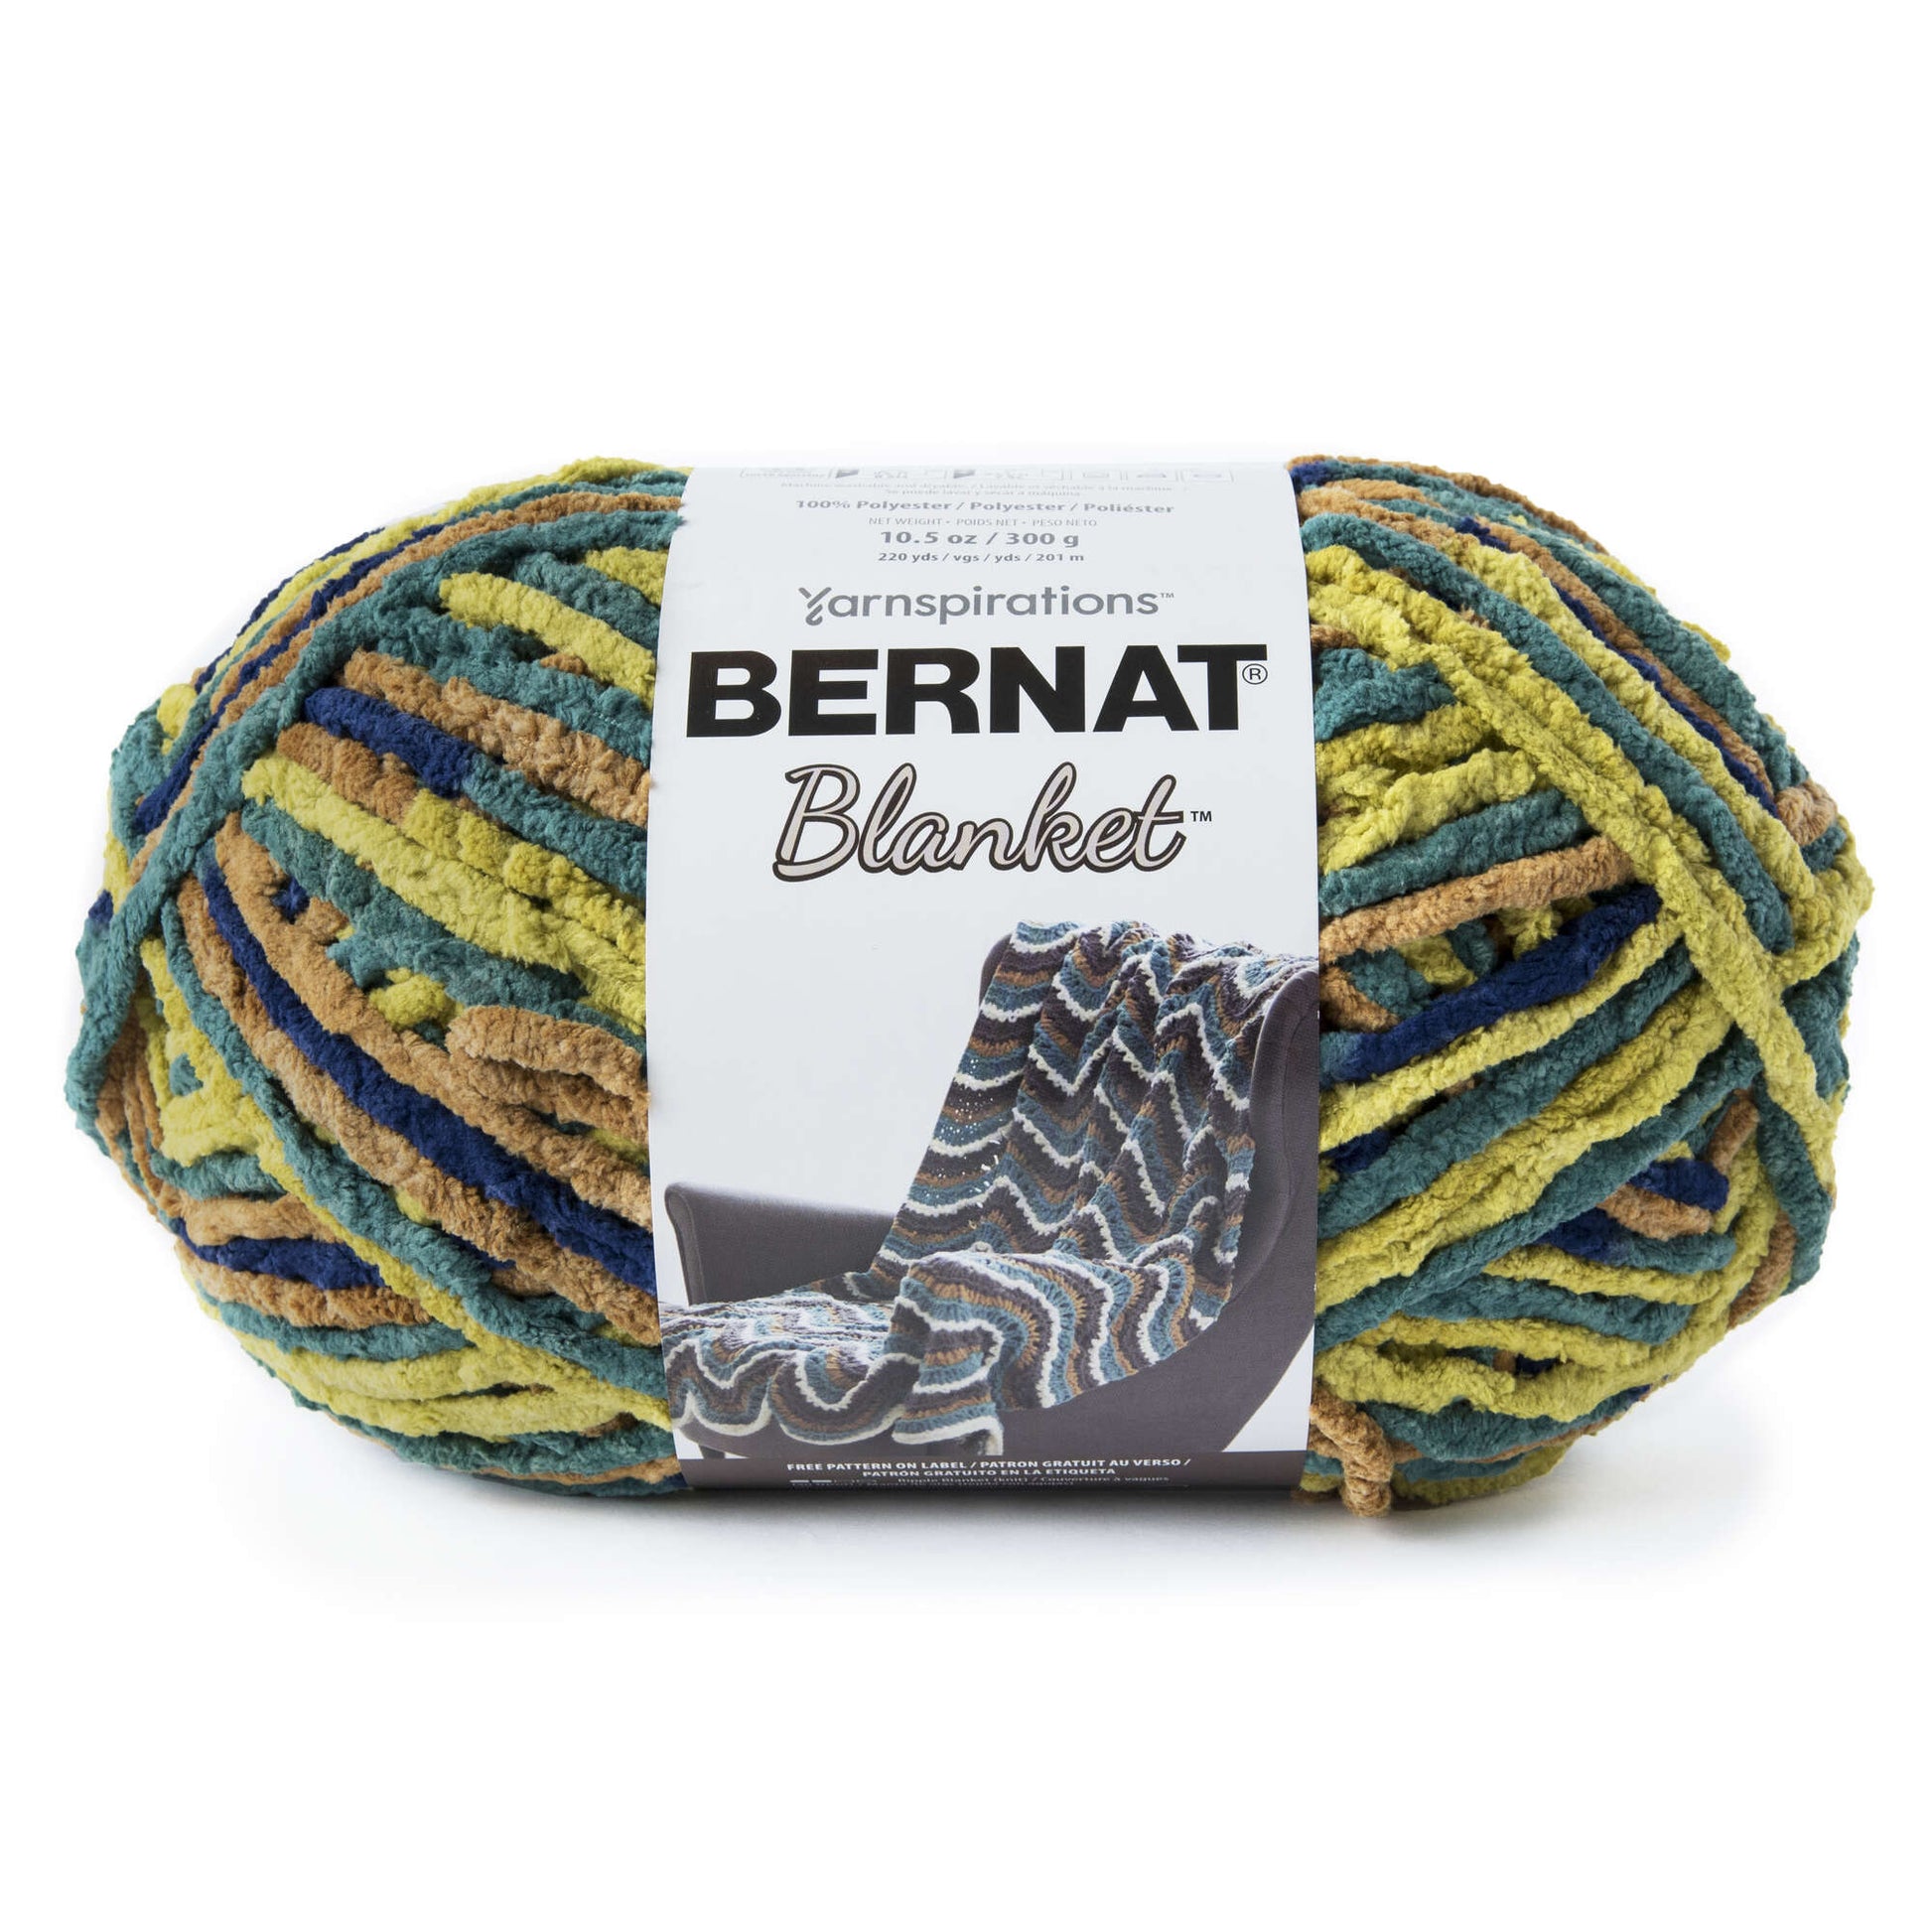 Bernat Blanket Yarn (300g/10.5oz) Brocade